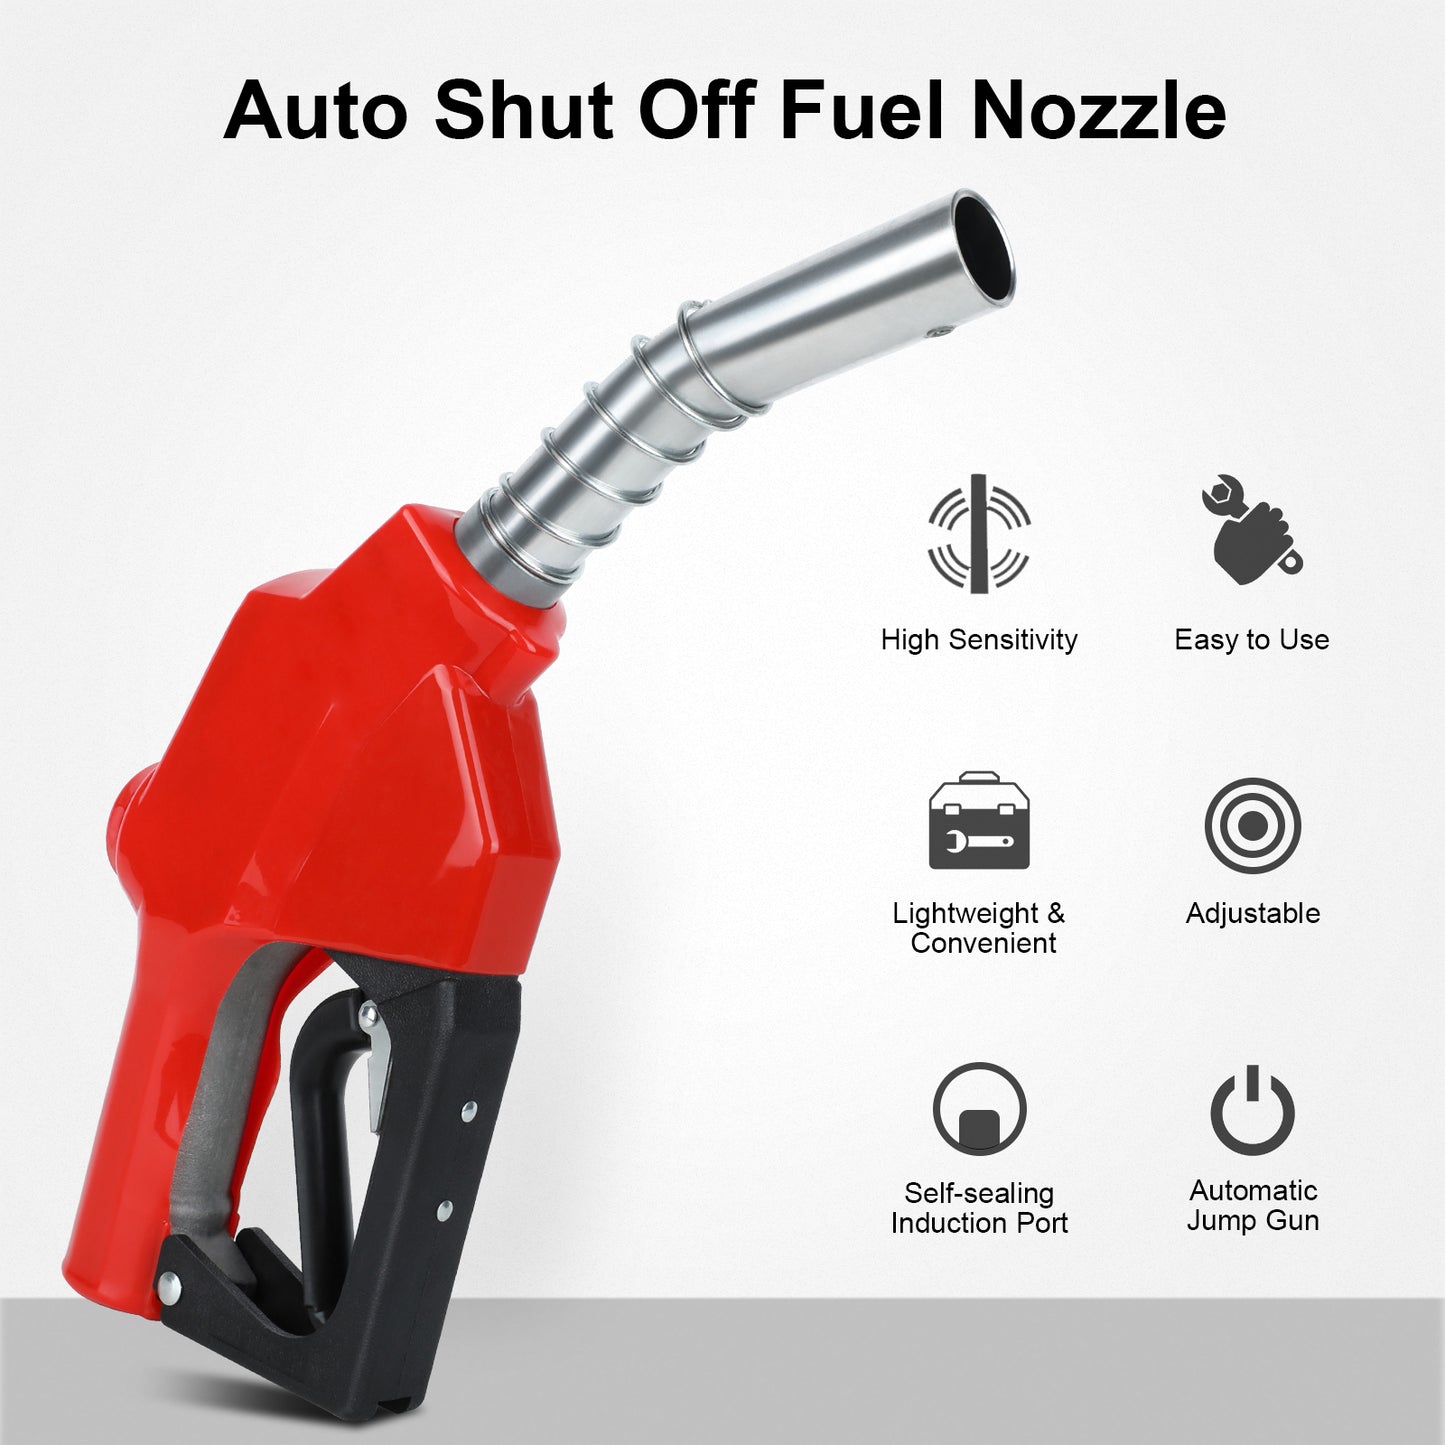 1" NPT Automatic Fuel Nozzle, Auto Shut Off, Diesel Kerosene Gasoline Refilling